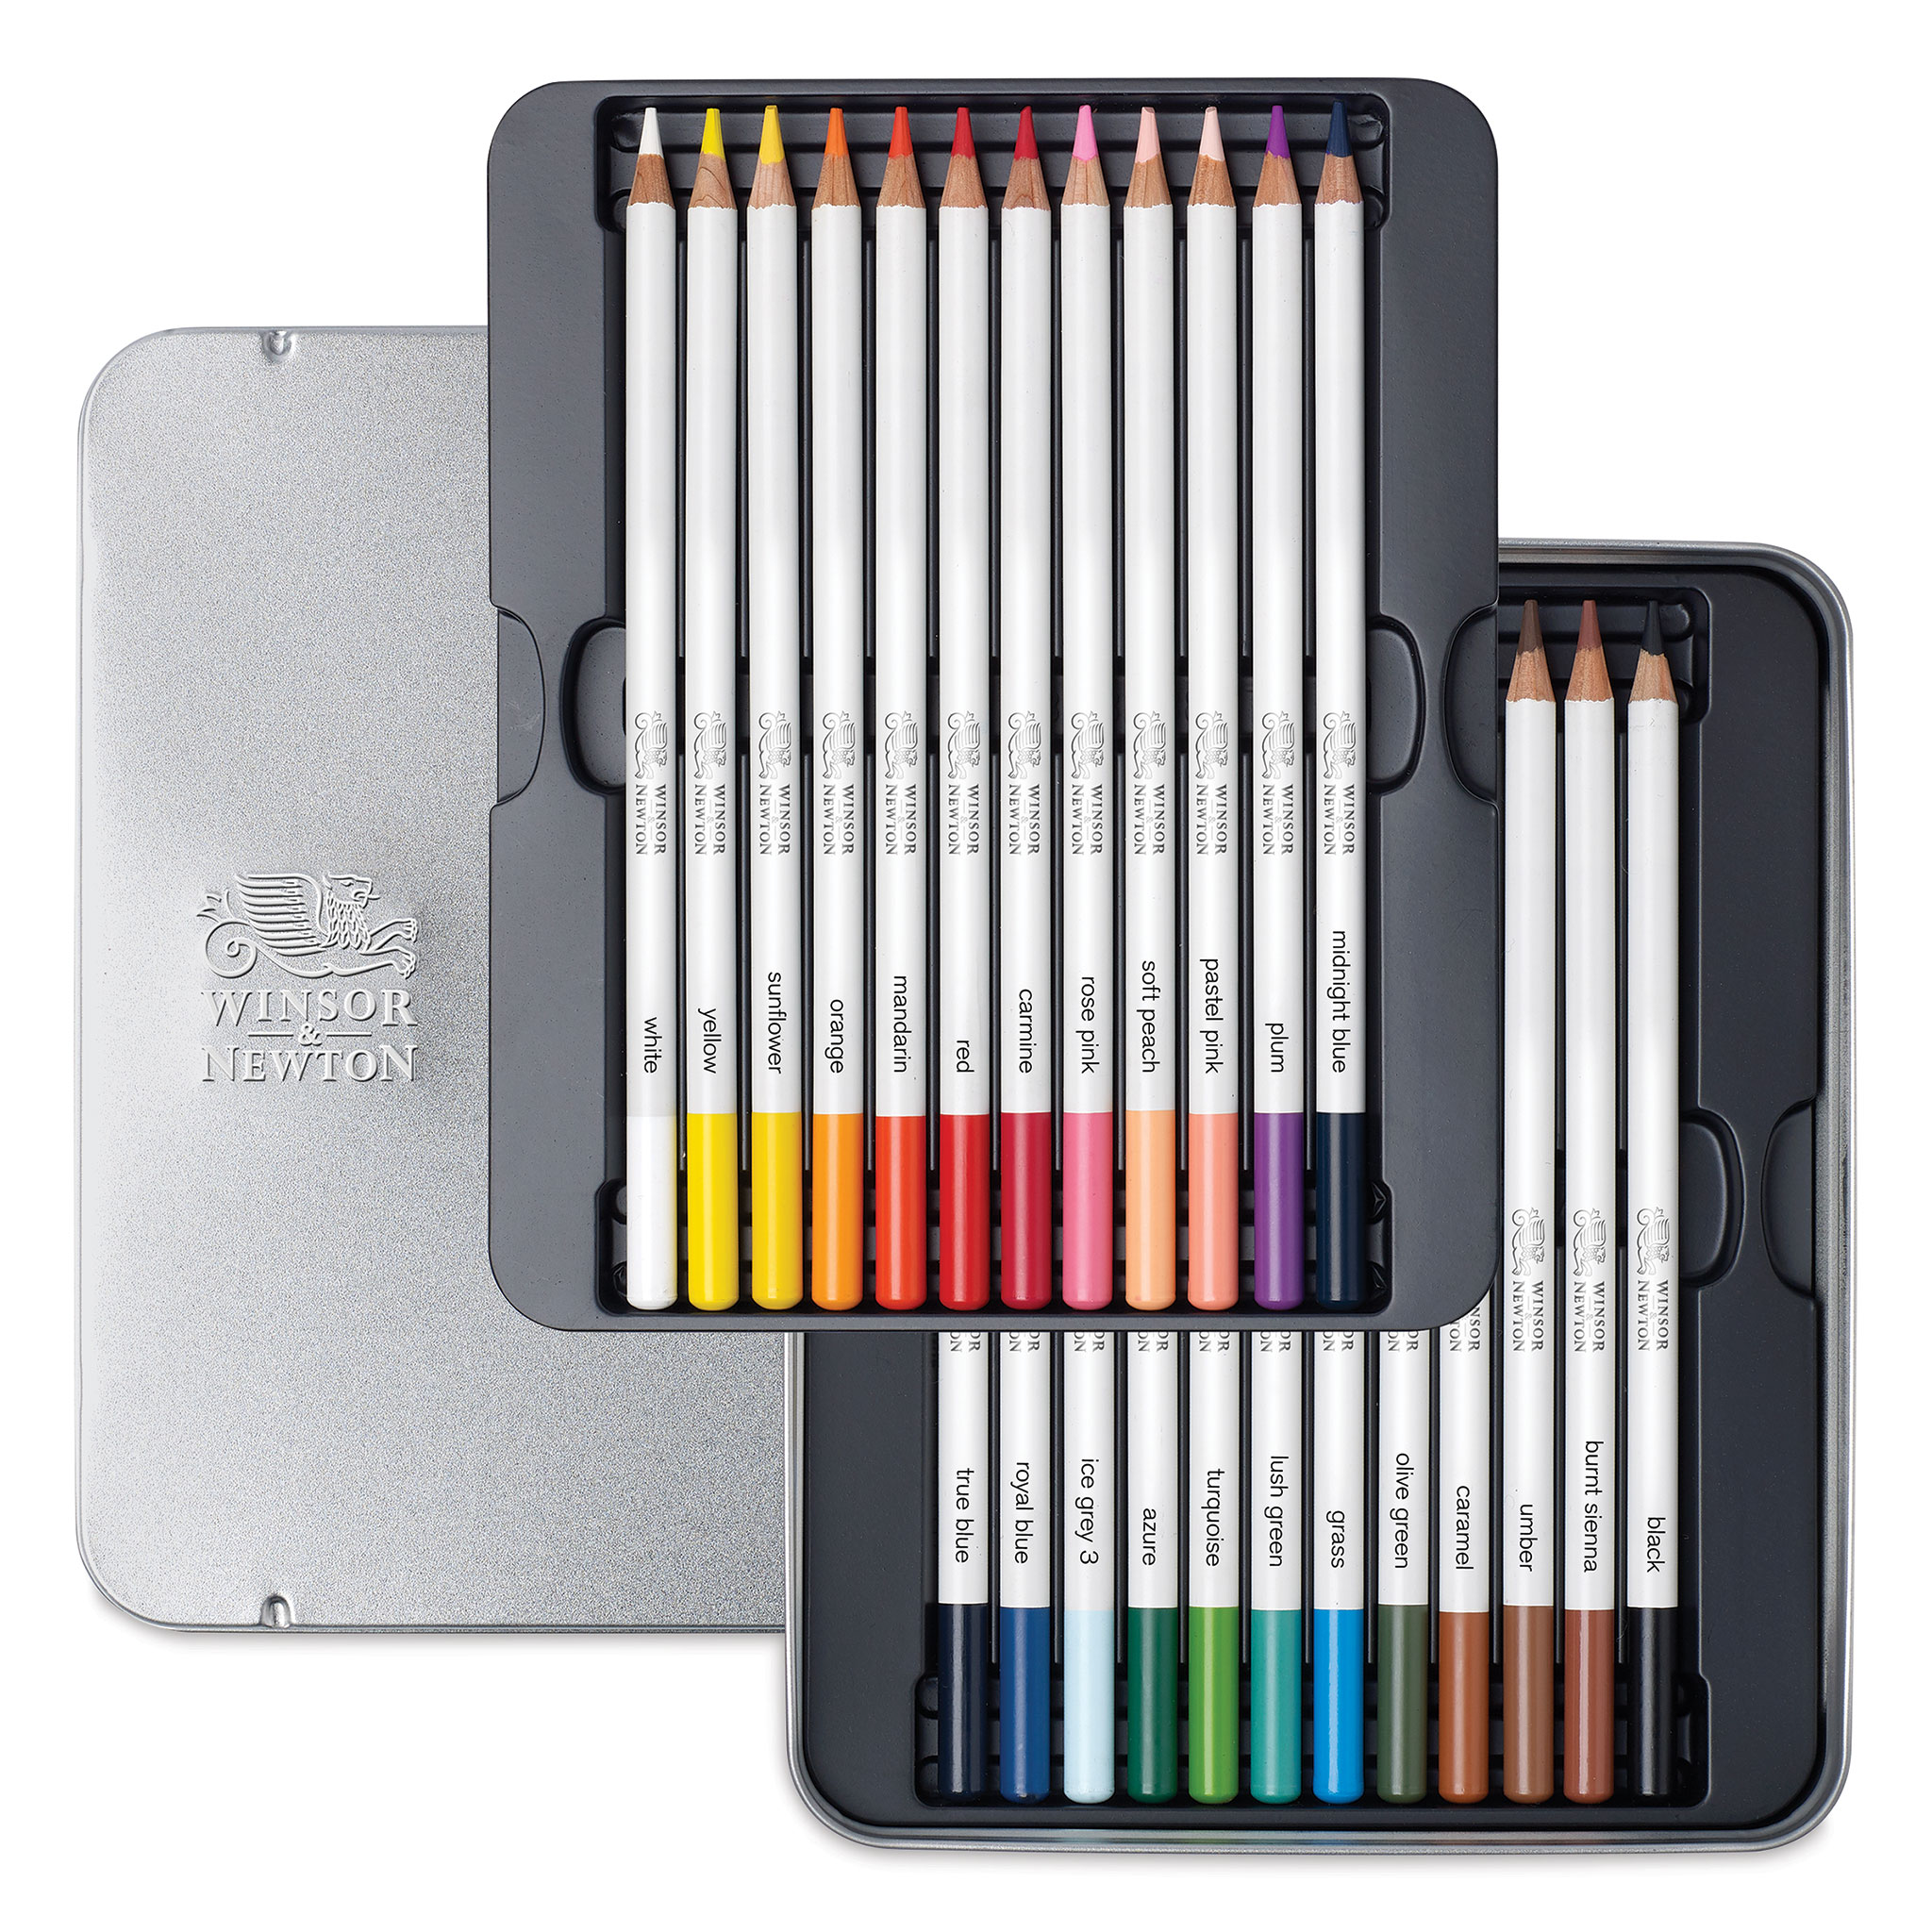 Studio Collection Charcoal Pencil TIN/6 | Winsor Newton